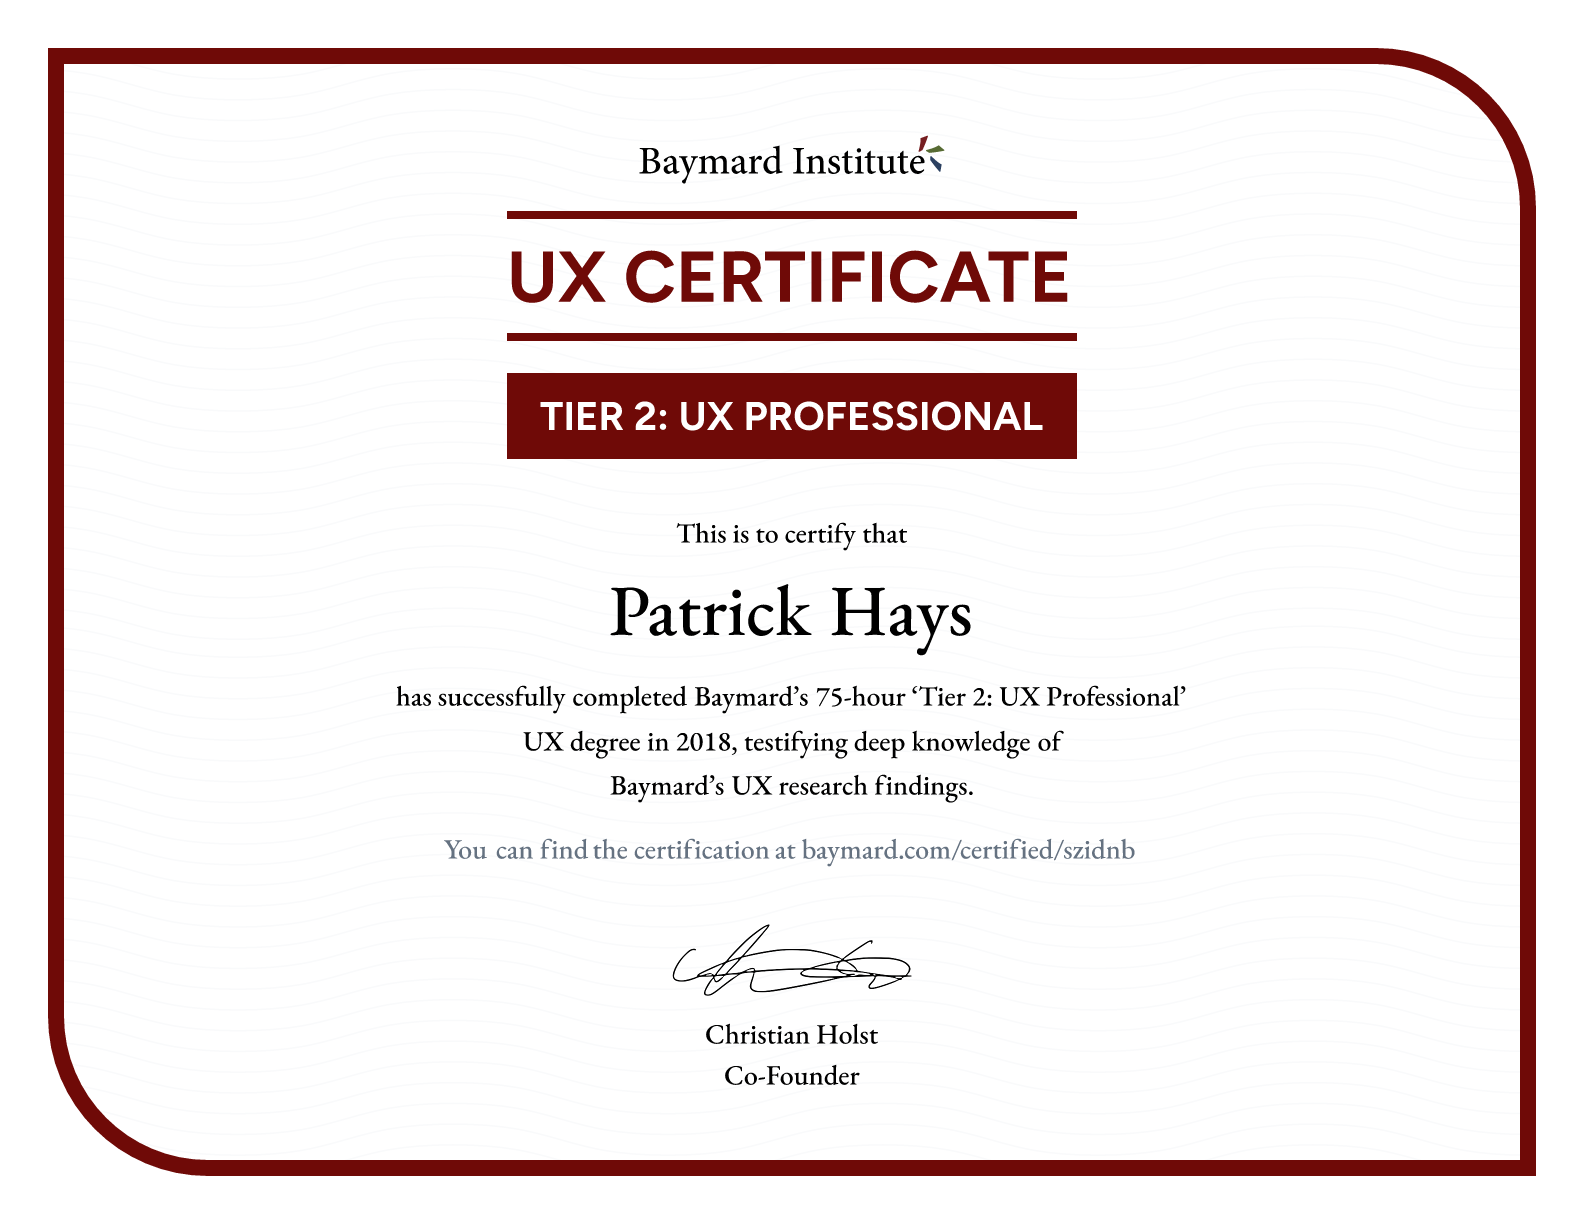 Patrick Hays’s certificate